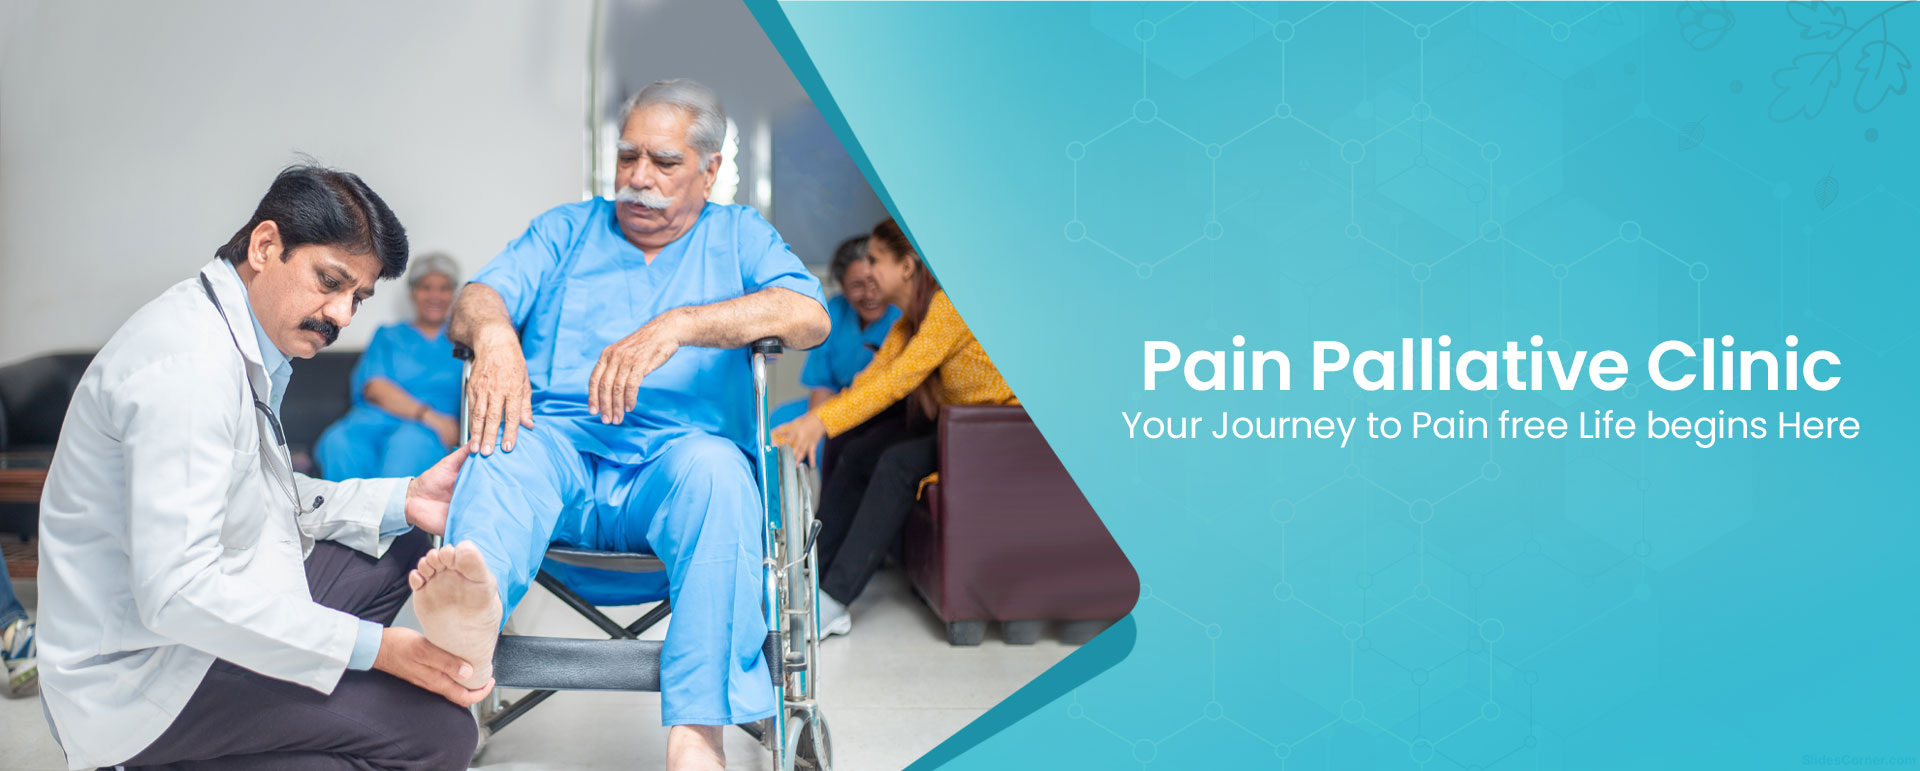 Pain & Palliative Clinic